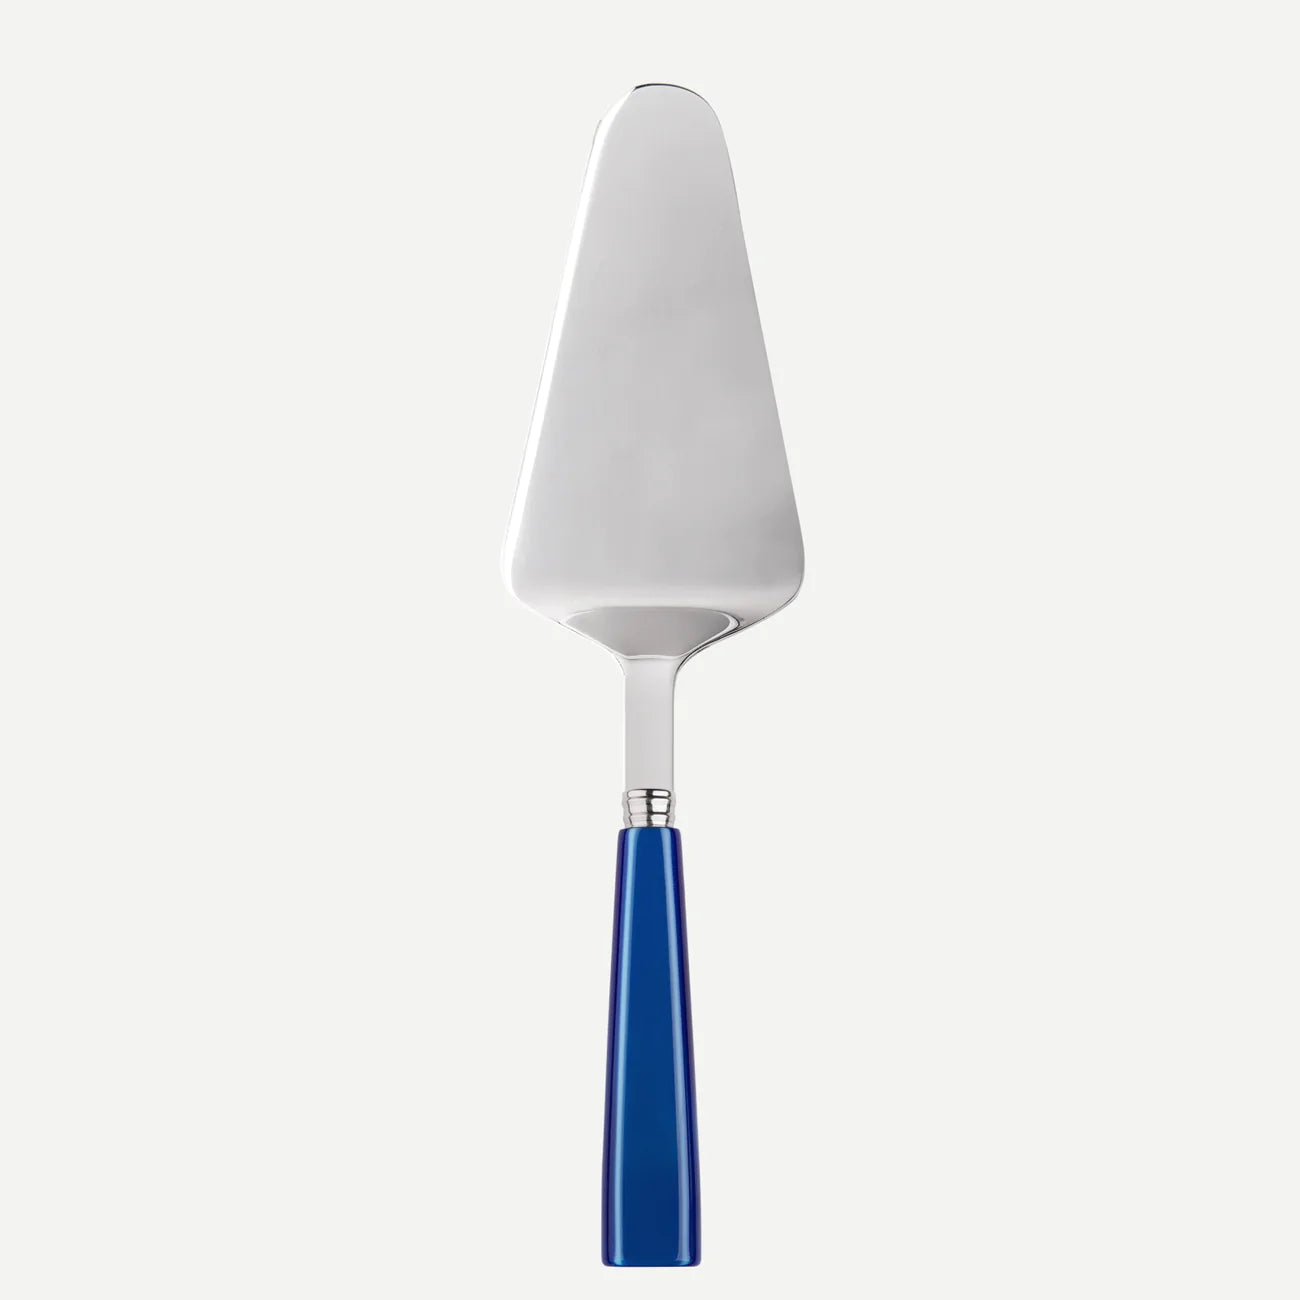 A sabre Paris tart slicer with a bright lapis blue handle. 